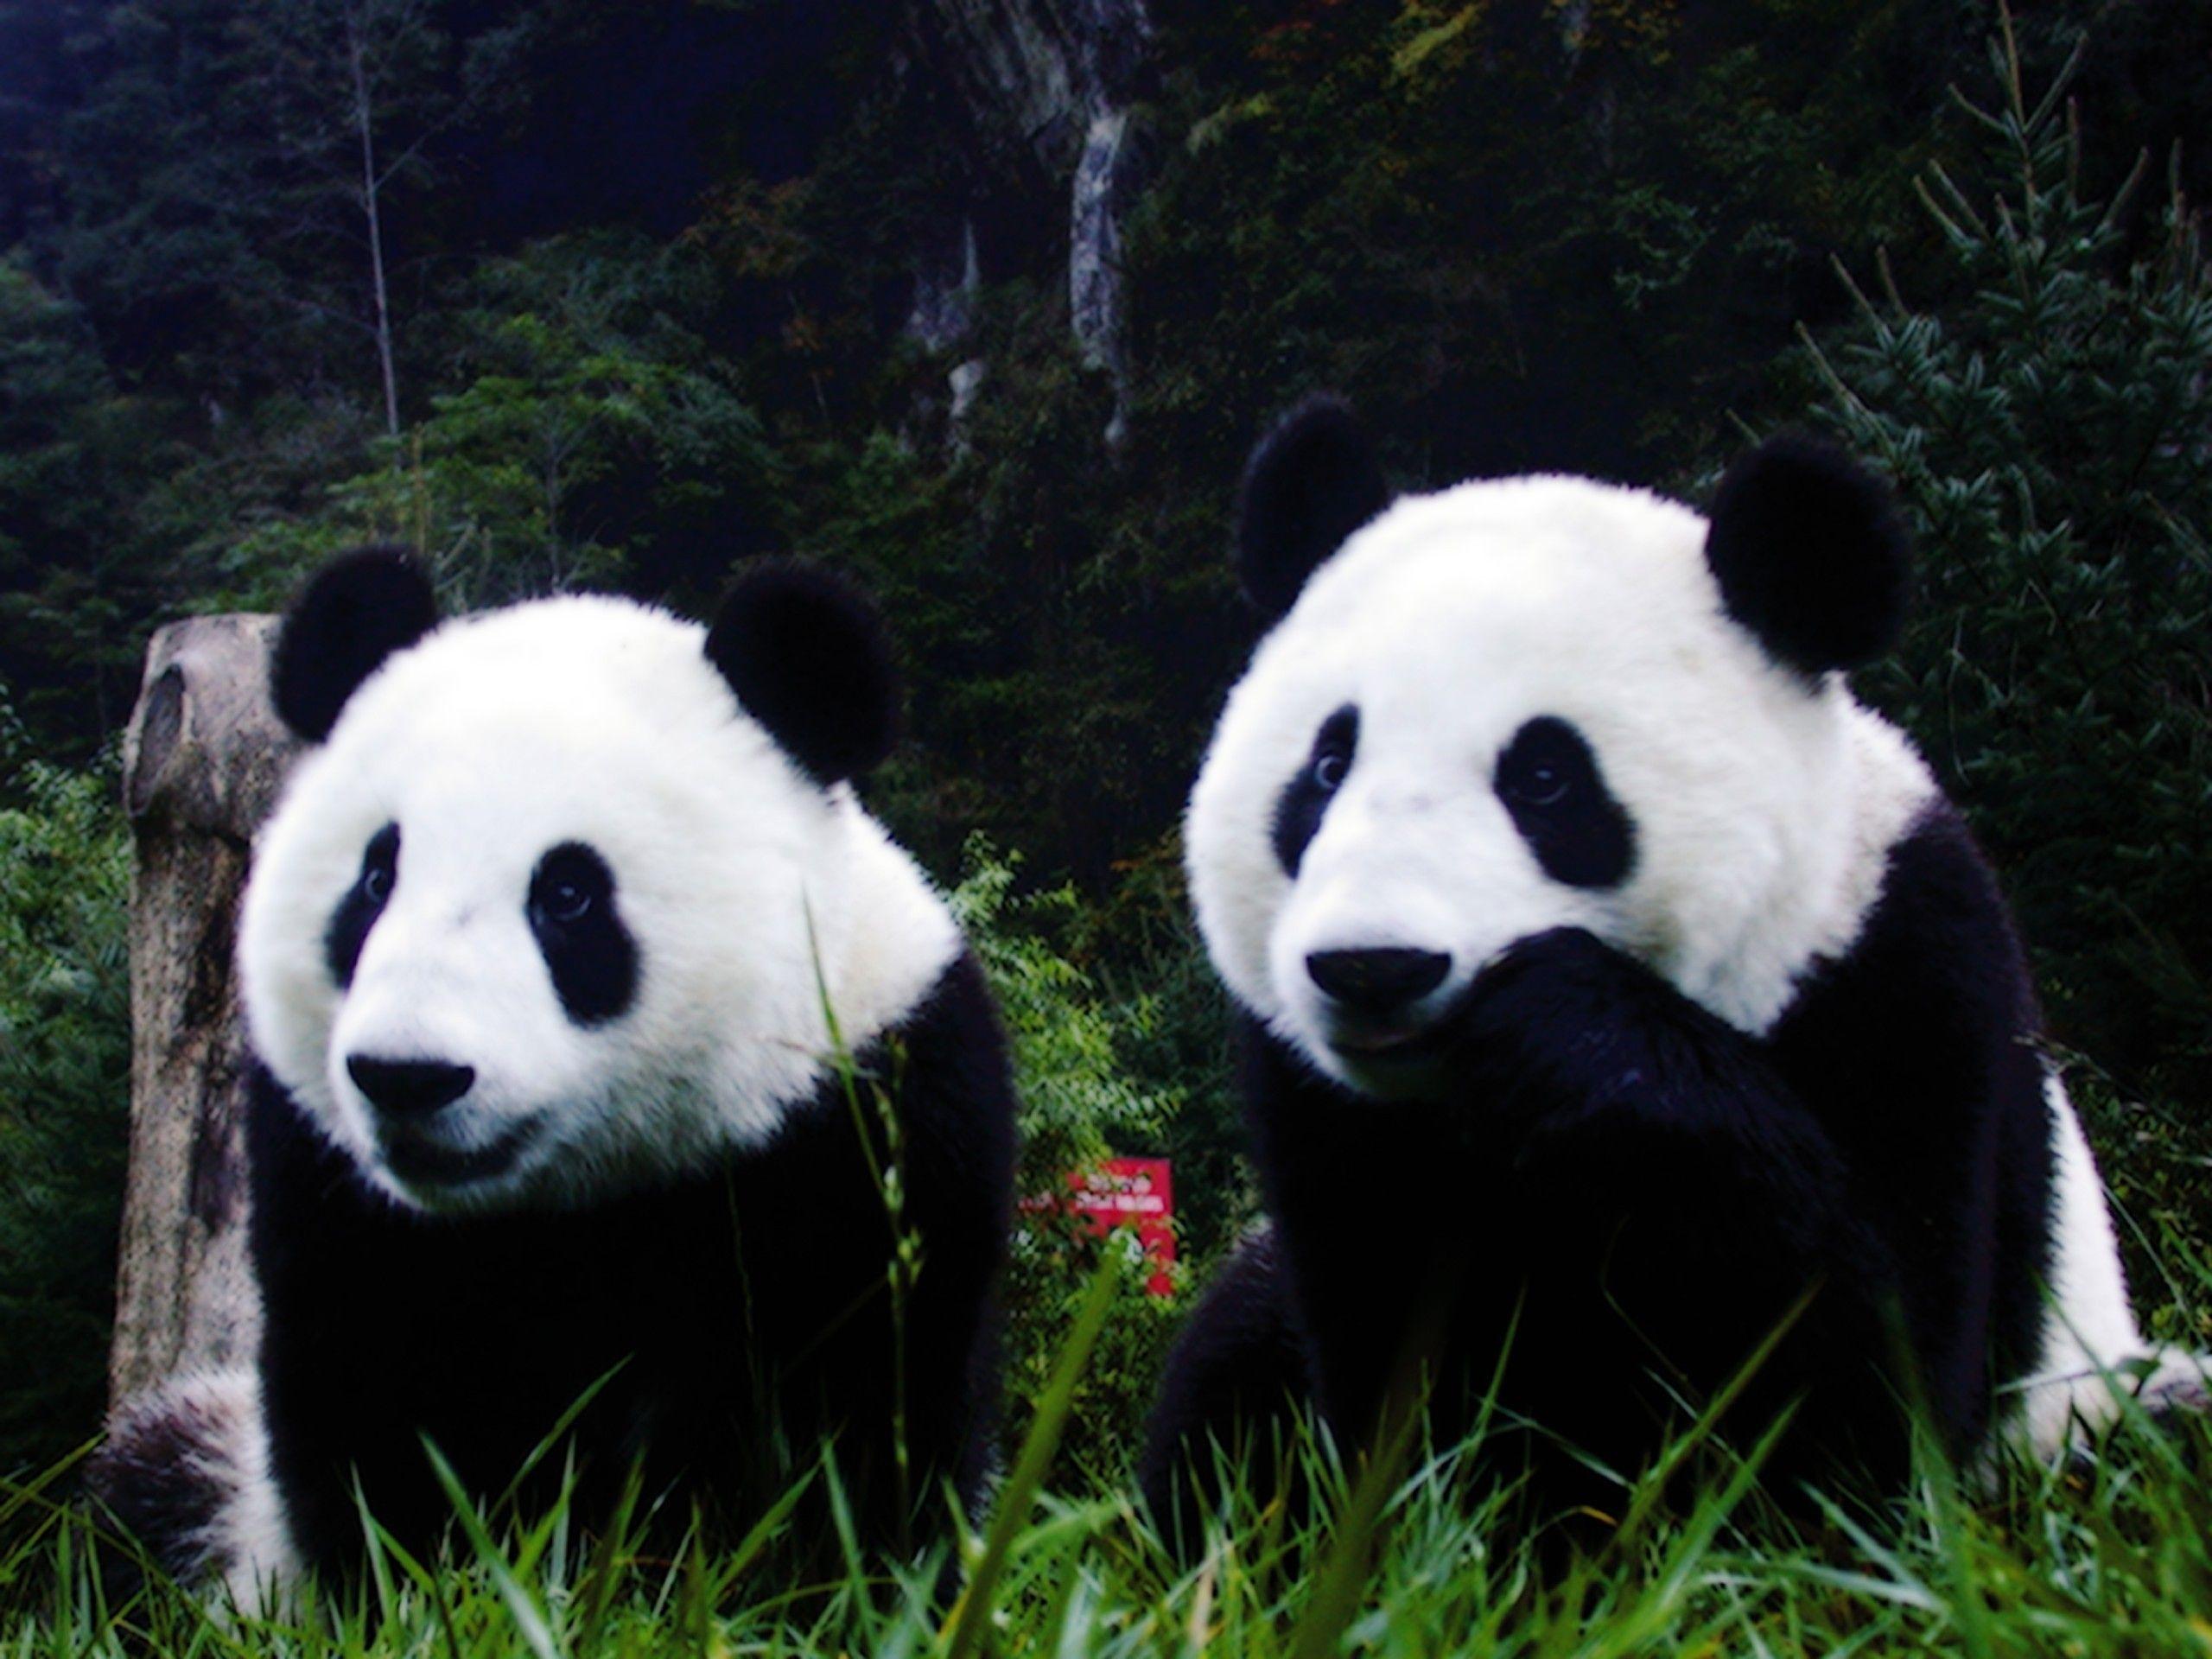 Animals nature panda bears wallpaper. PC